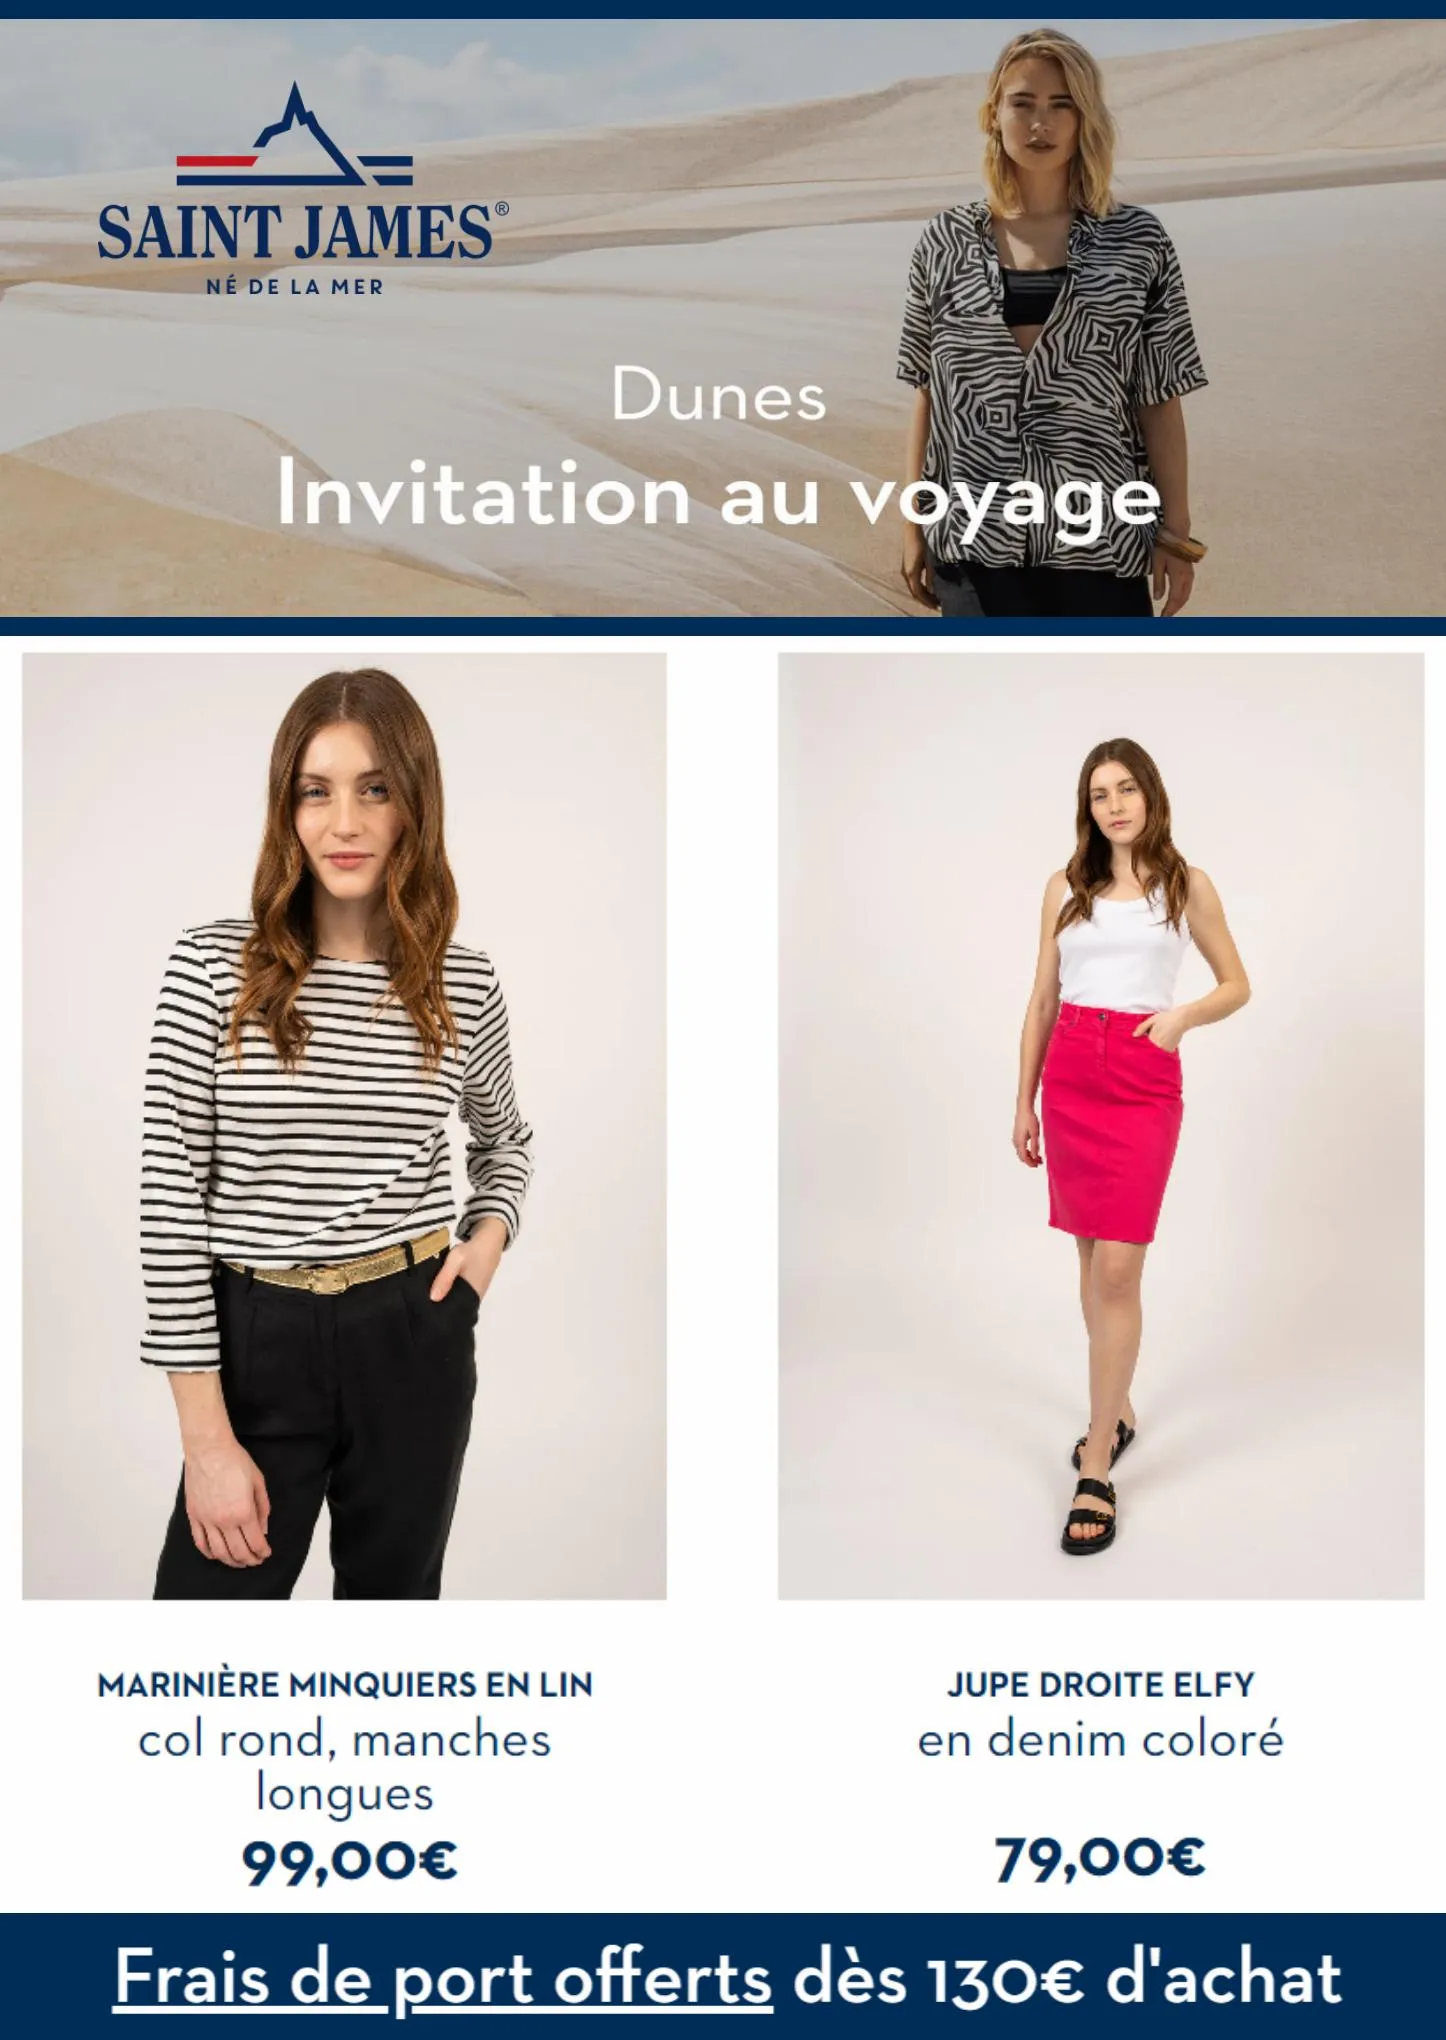 Catalogue Invitation au Voyage, page 00003